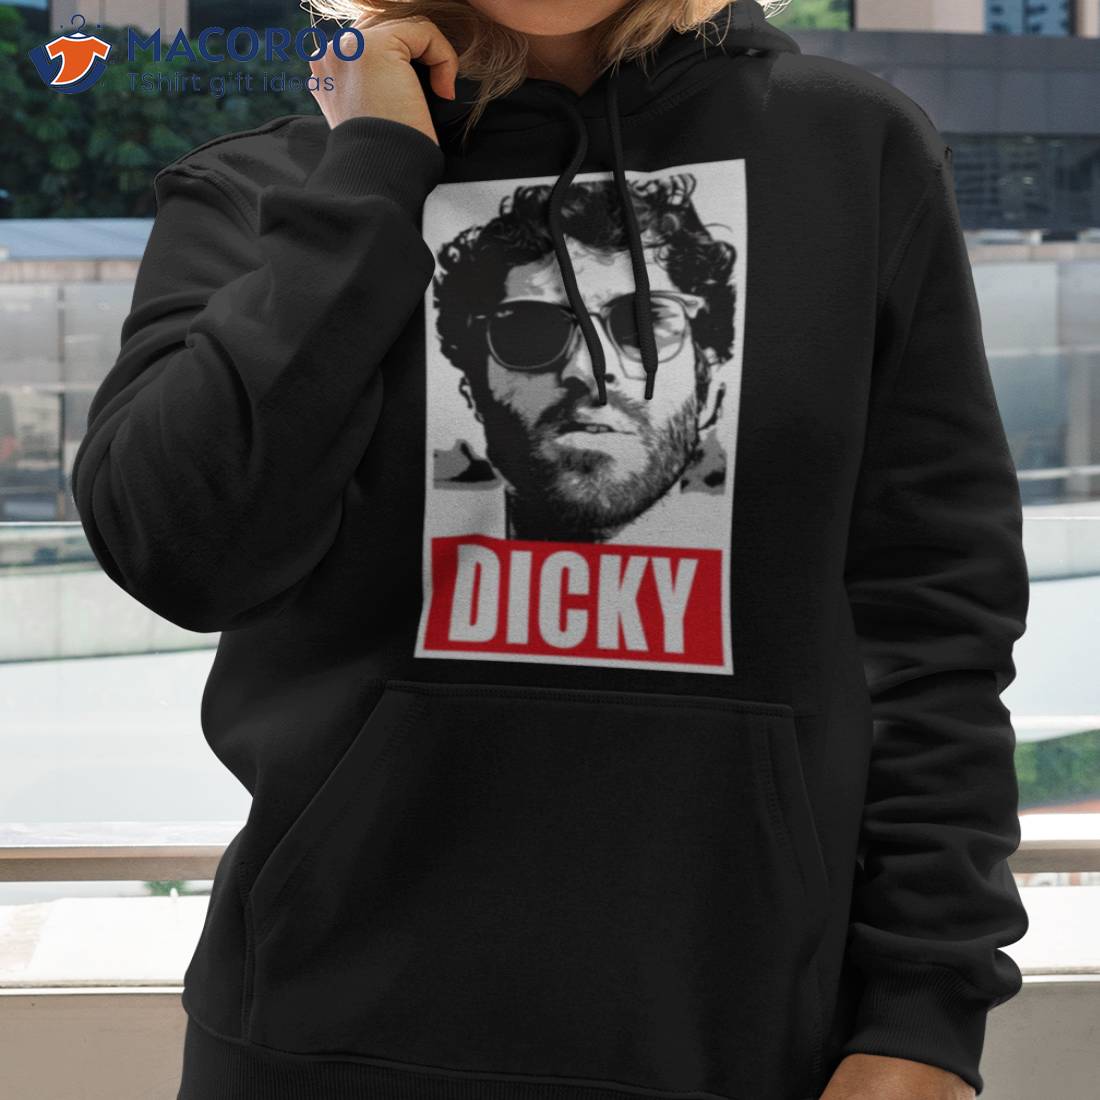 Lil Dicky Merch, Lil Dicky Fans Merchandise